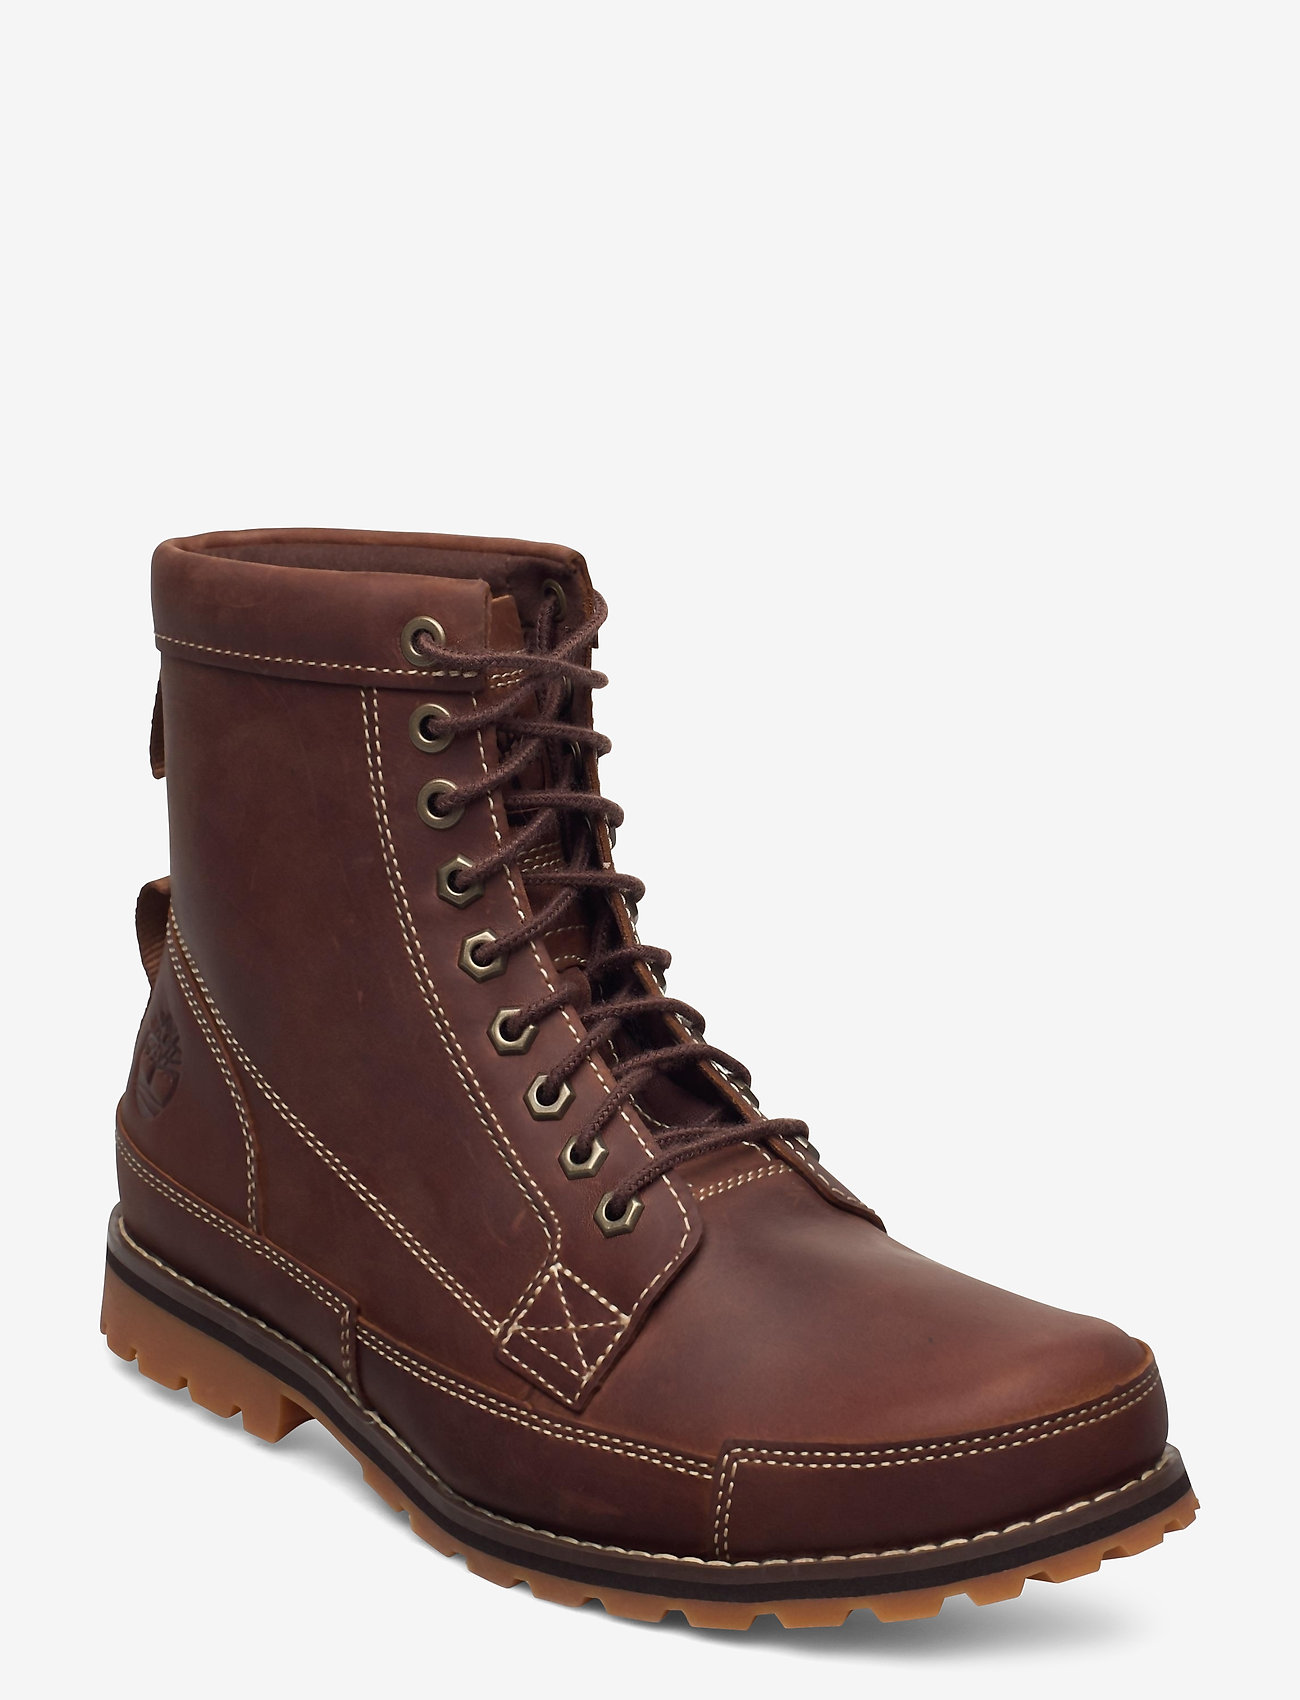 Originals Ii Leather 6 In Boot (Saddle 